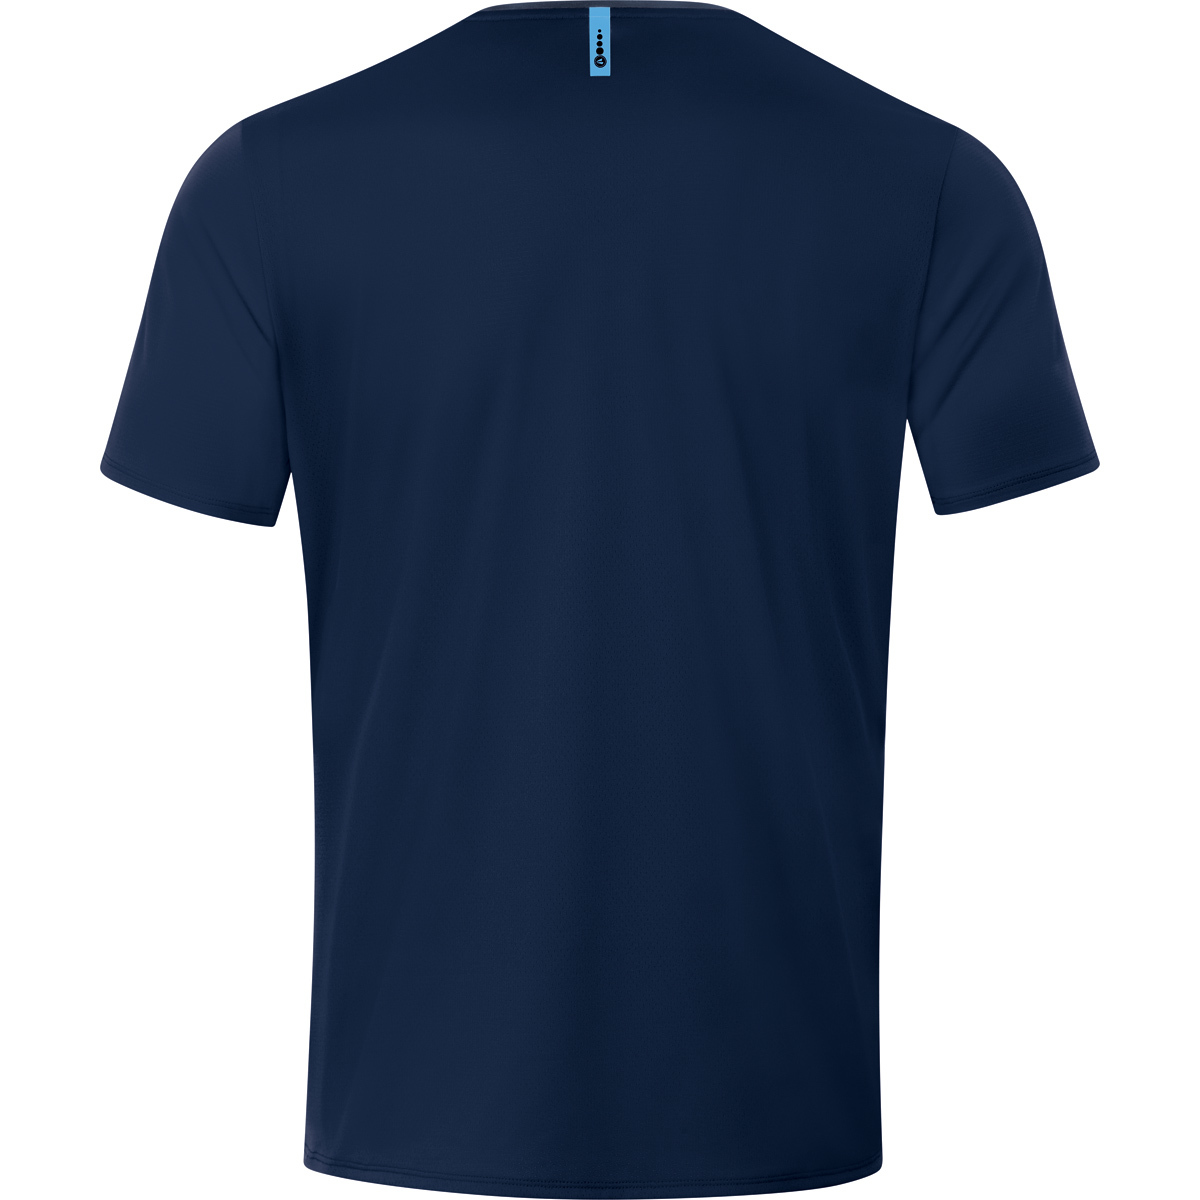 JAKO T-Shirt Champ 2.0 marine/darkblue/skyblue, S, Gr. 6120 Herren